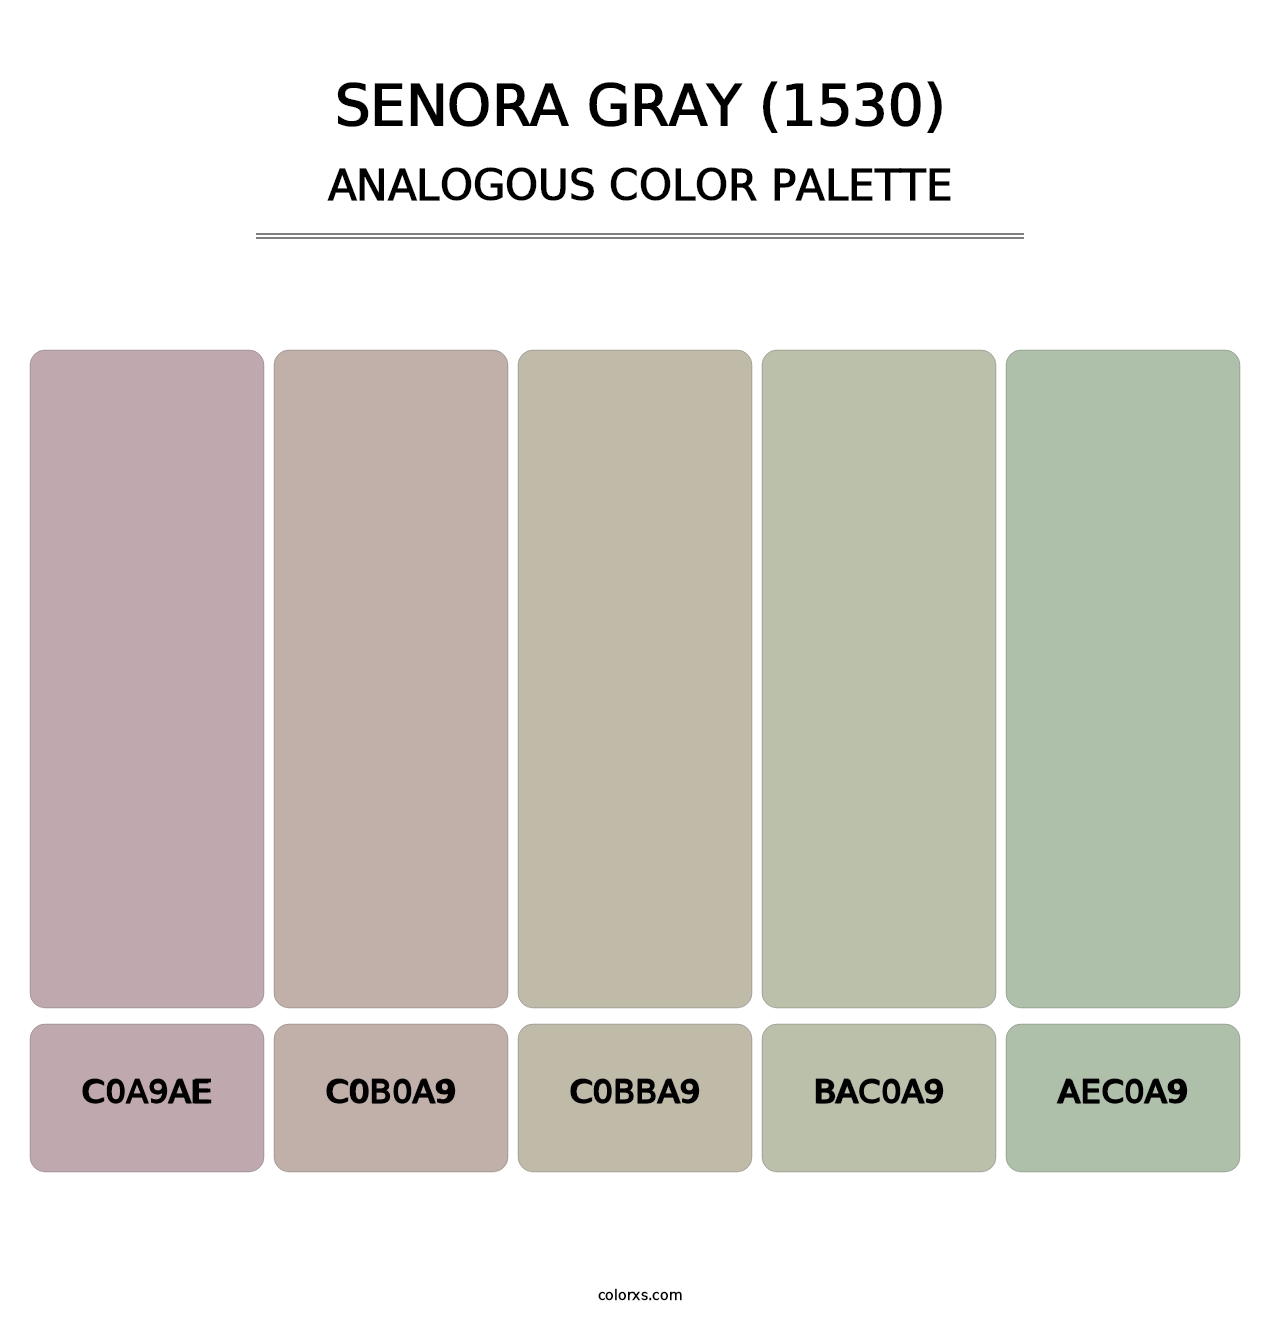 Senora Gray (1530) - Analogous Color Palette